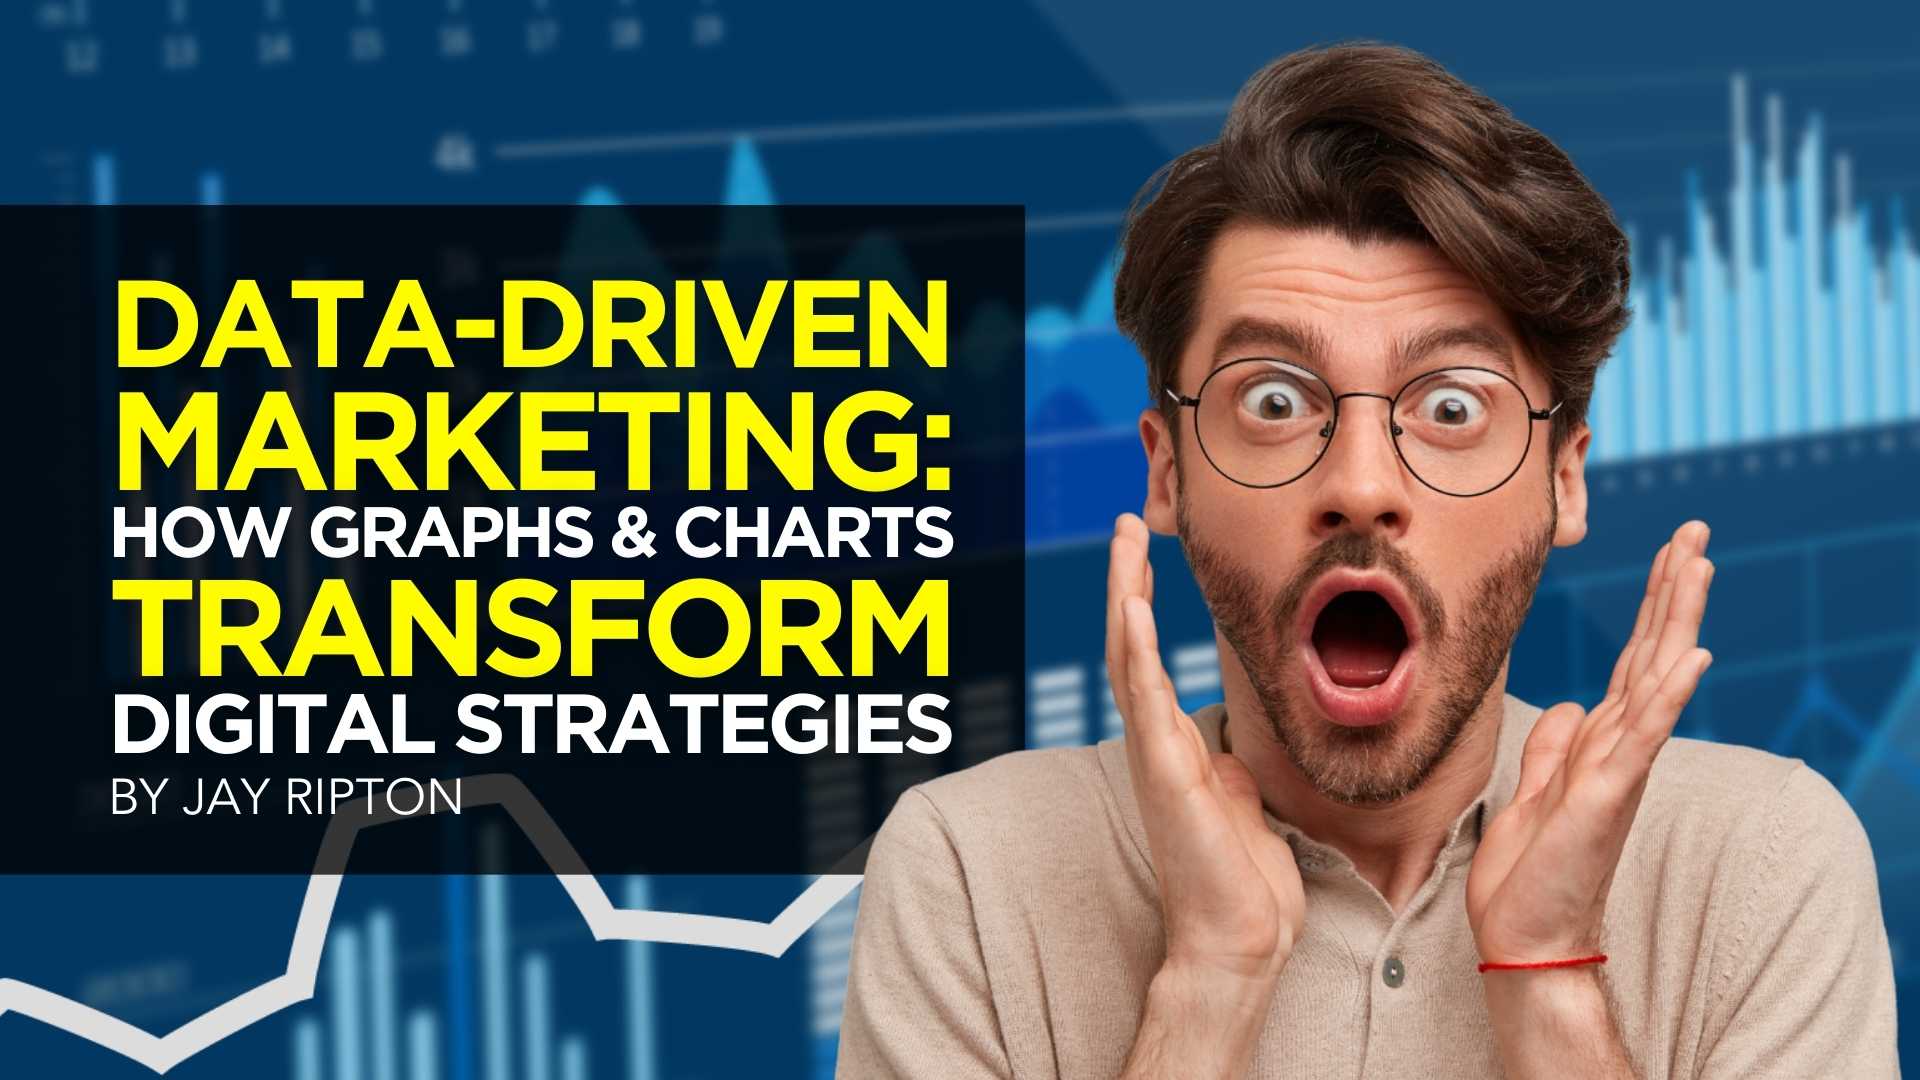 “Transforming Digital Strategies through Graphs and Charts in Data-driven Marketing”